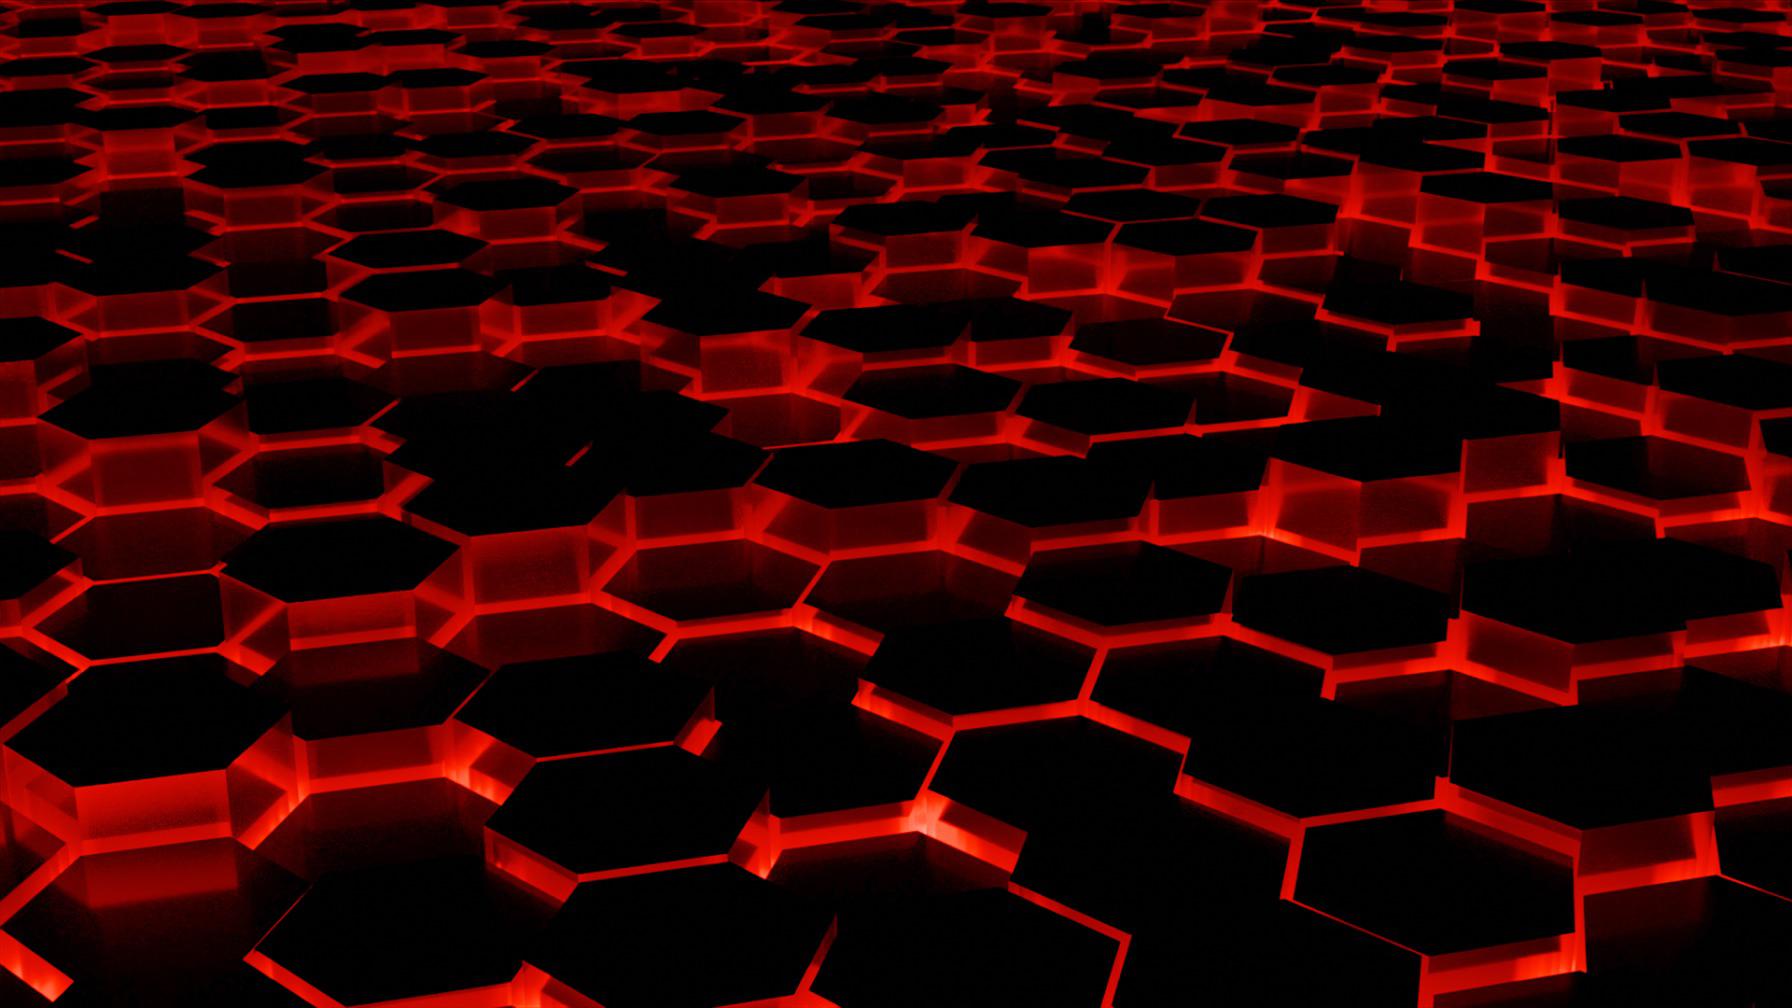 Red glowing hexagonal wallpaper (made in blender)